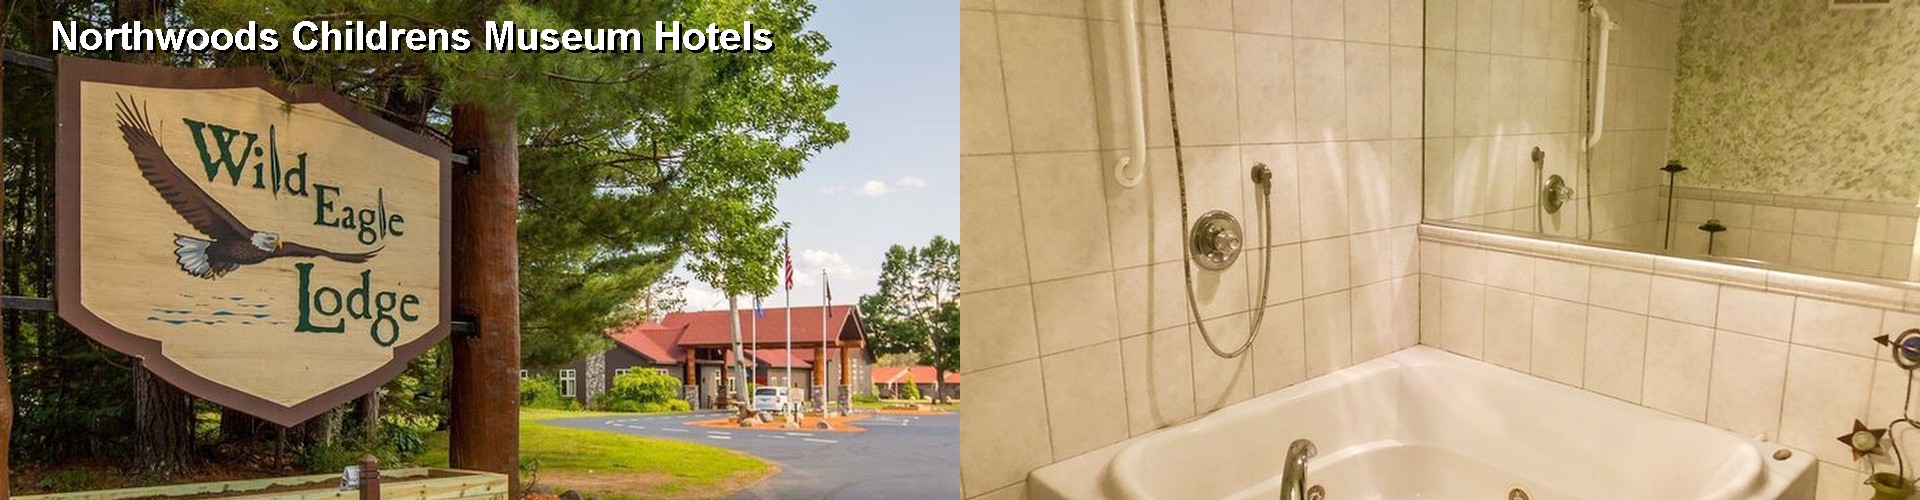 5 Best Hotels near Northwoods Childrens Museum